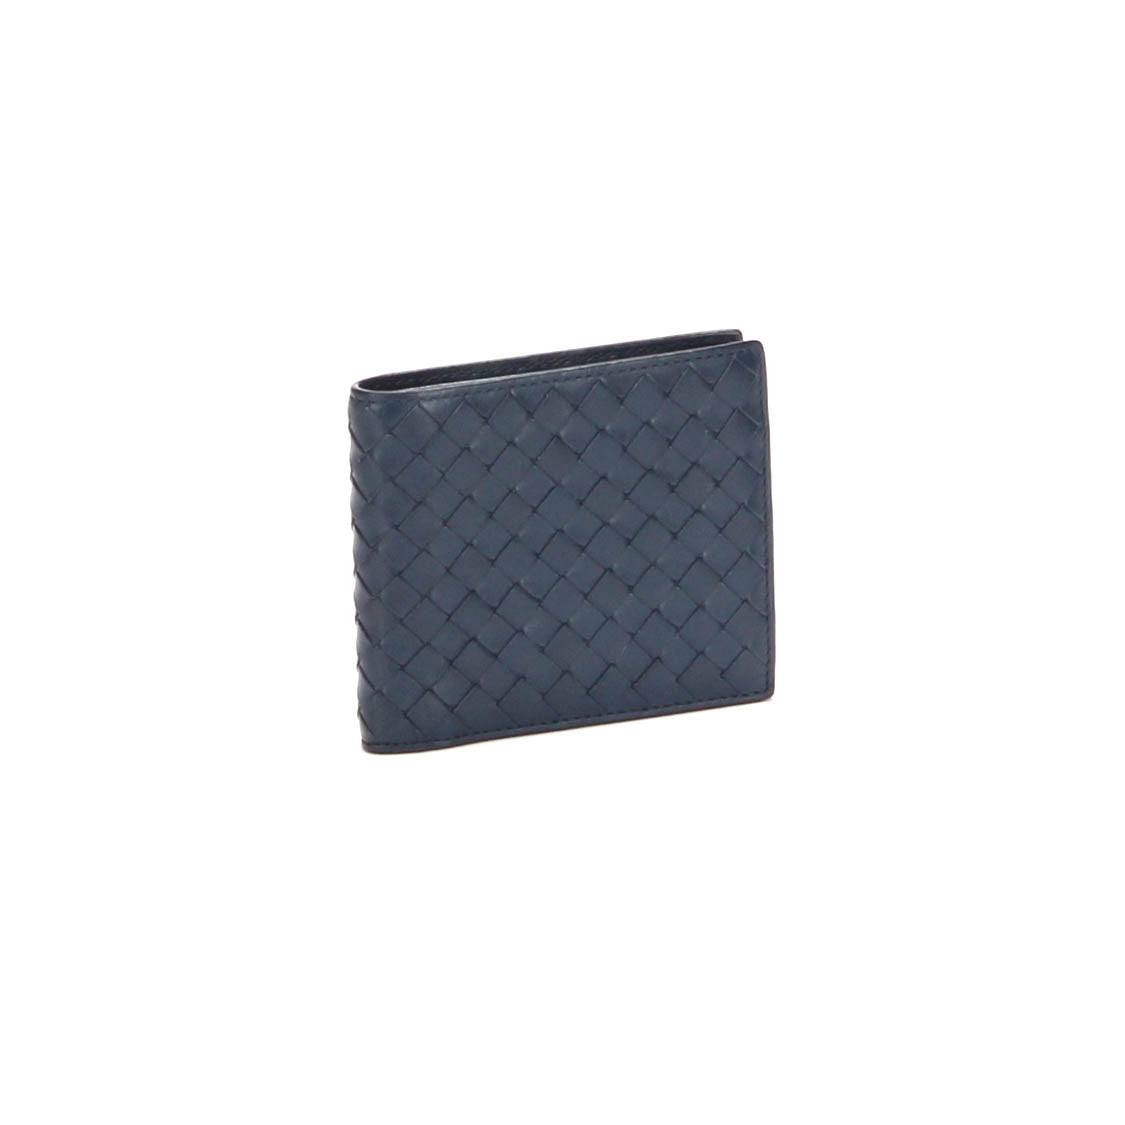 Intrecciato Bi-Fold Leather Wallet